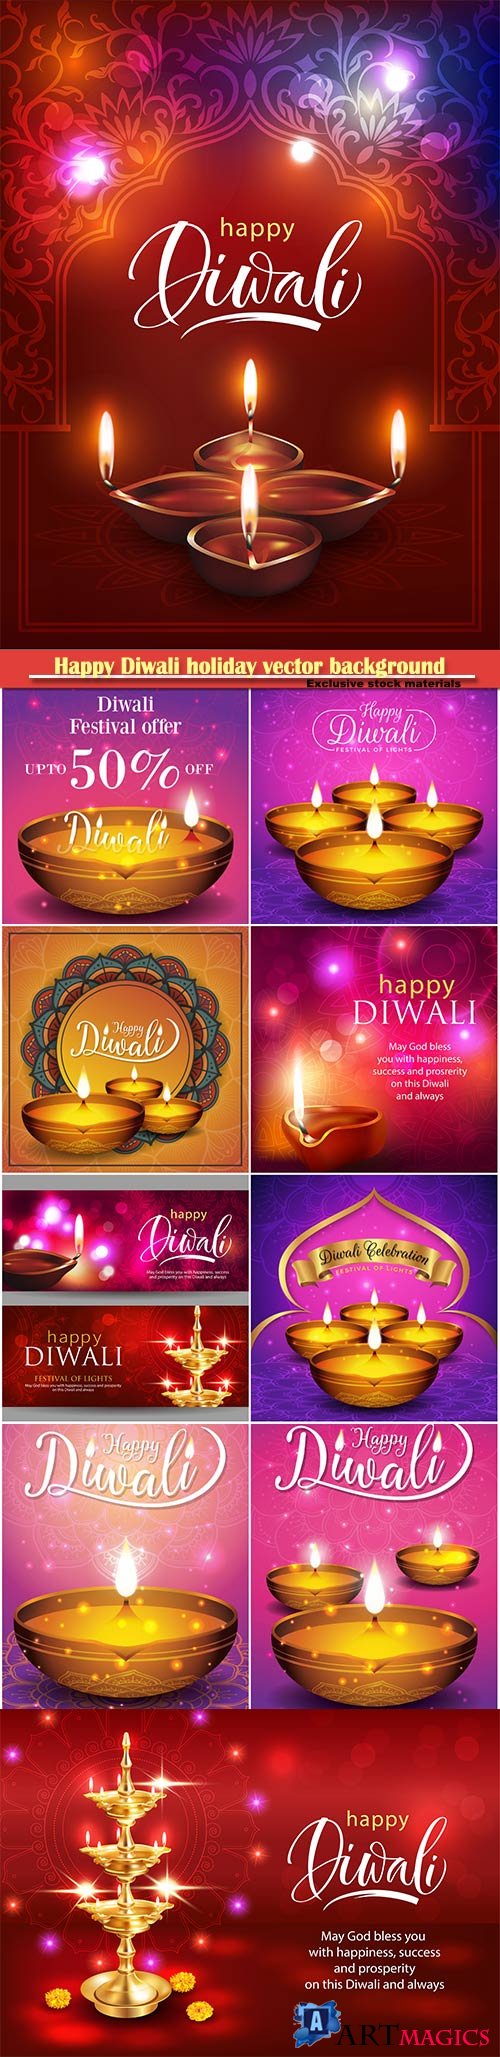 Happy Diwali holiday beautiful vector background